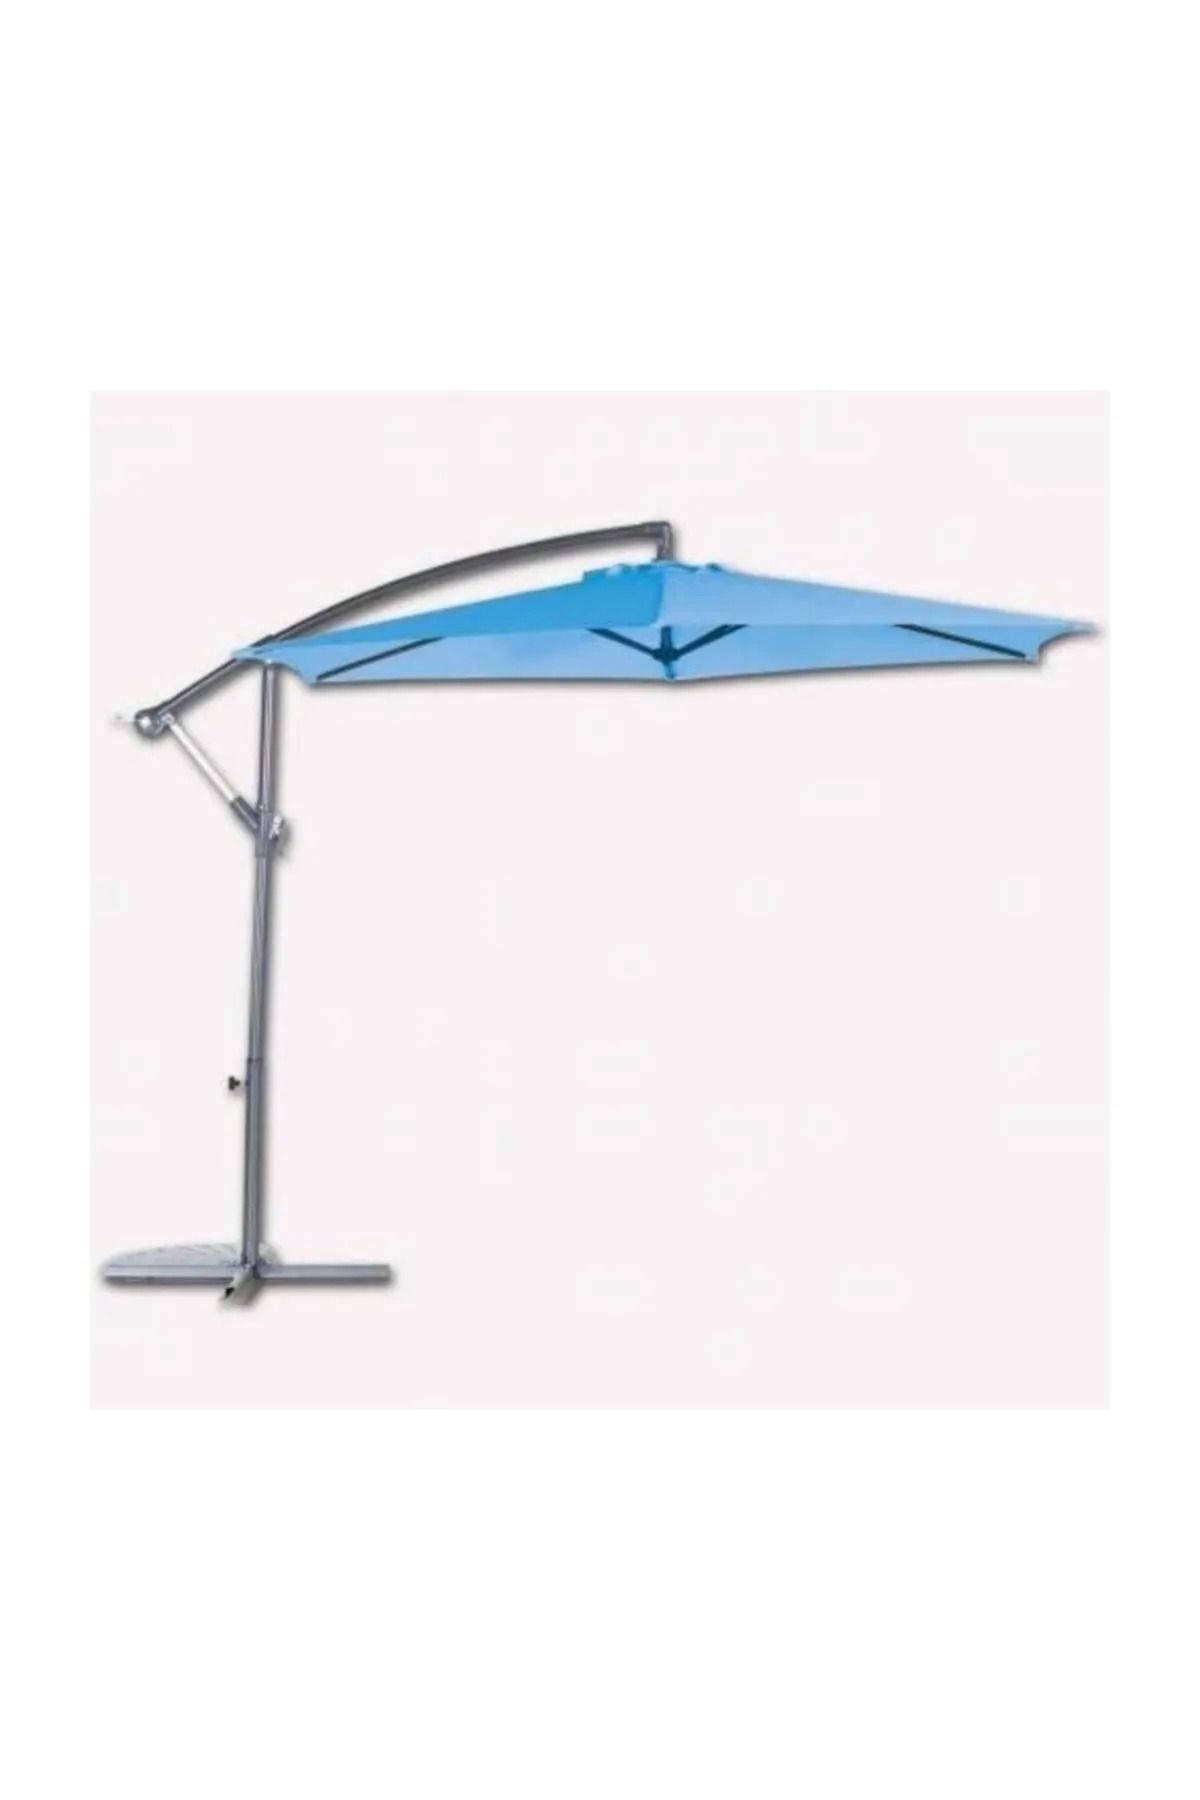 Bidesenal Makaralı Sistem Bahçe Şemsiyesi, Ampül Şemsiye, 300cm Polyester Bahçe Şemsiyesi Aş08